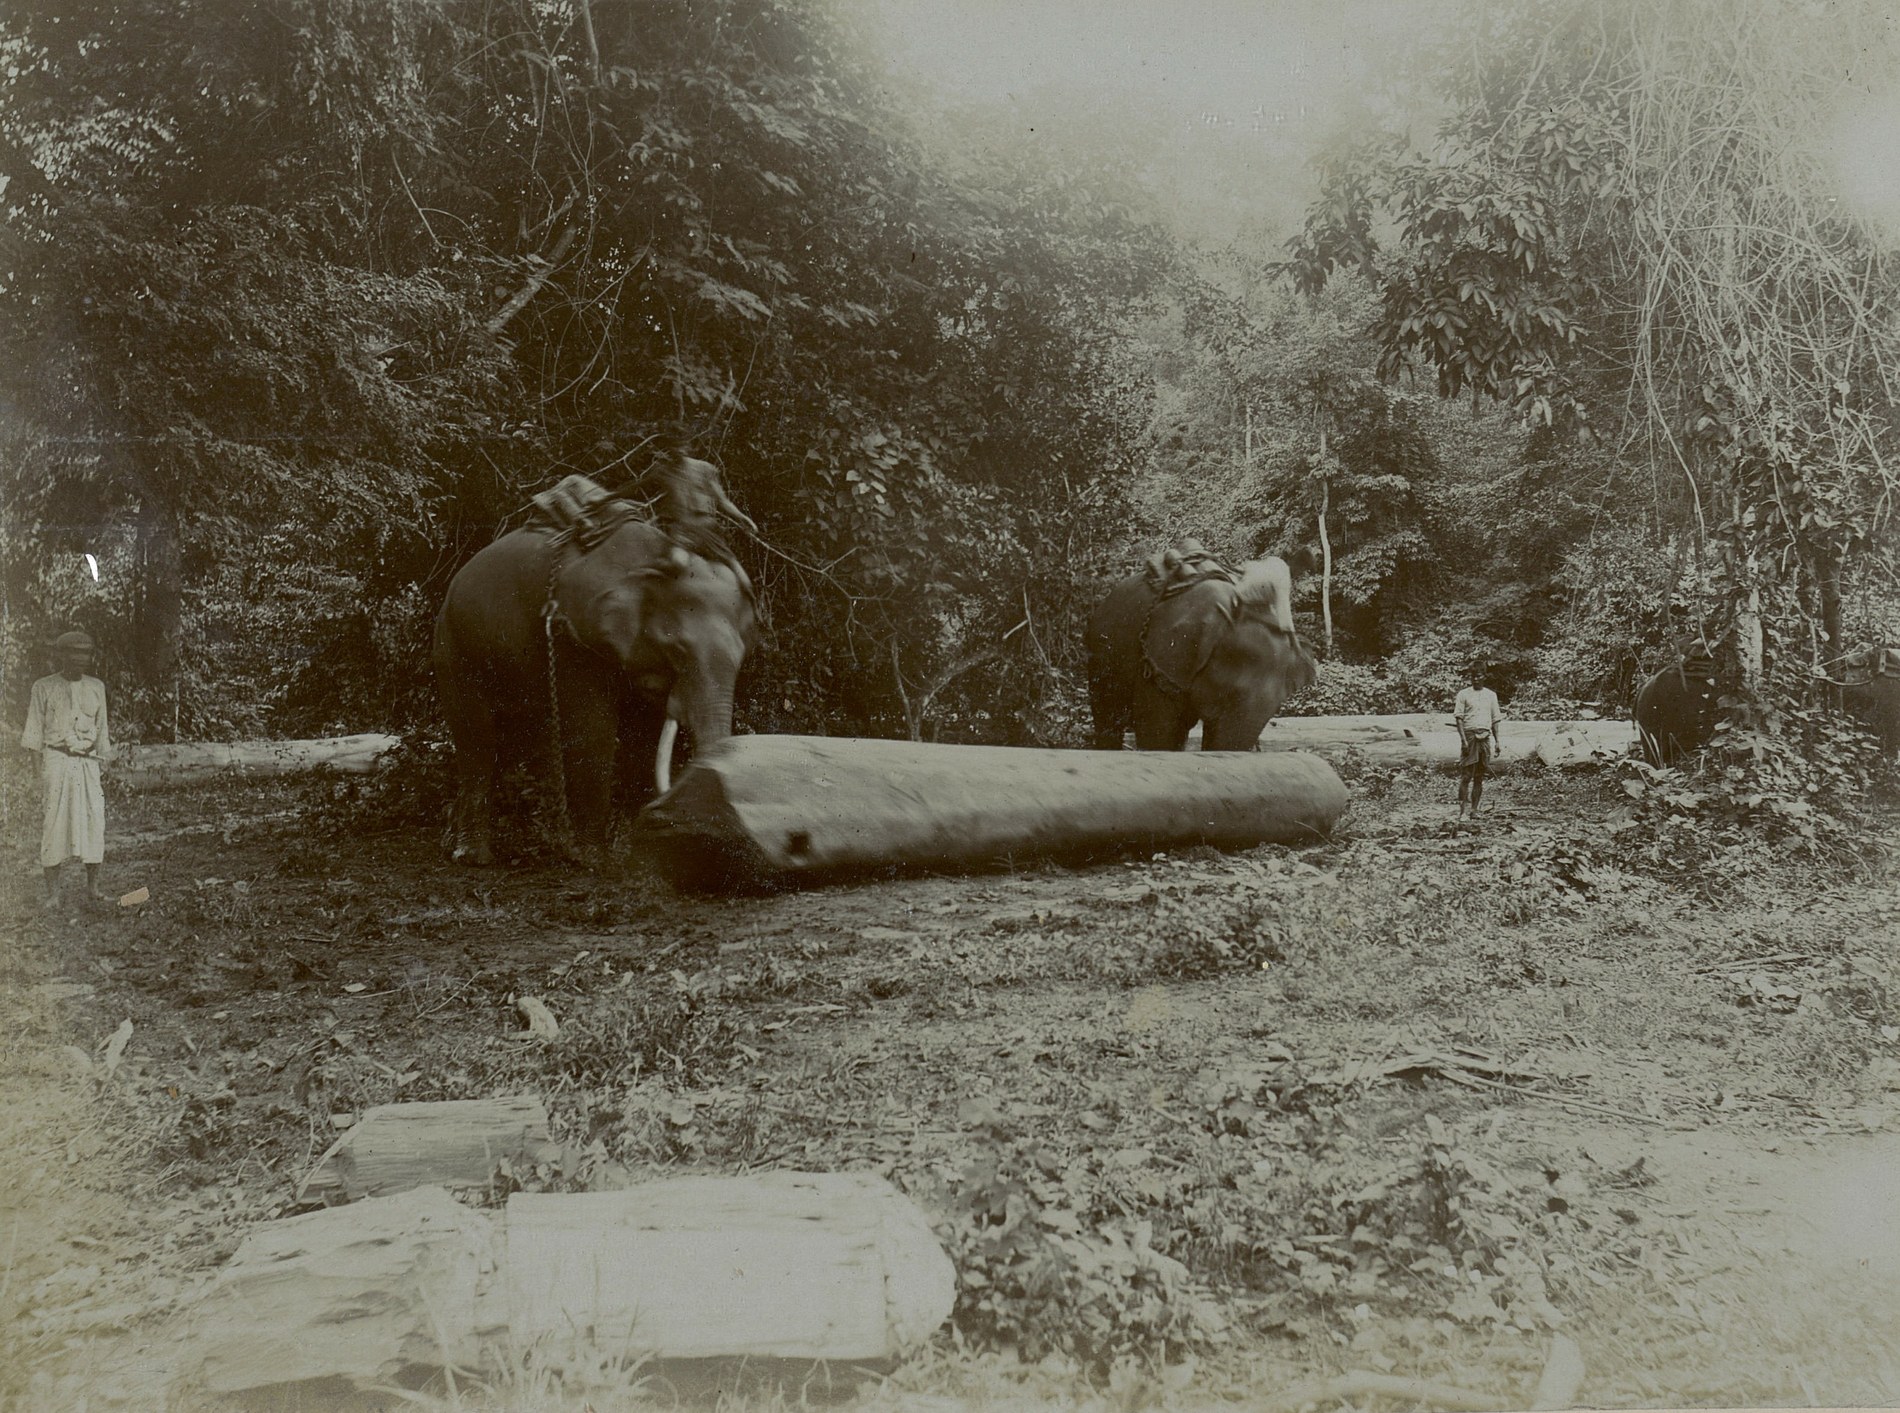 Two elephants rolling a teak log